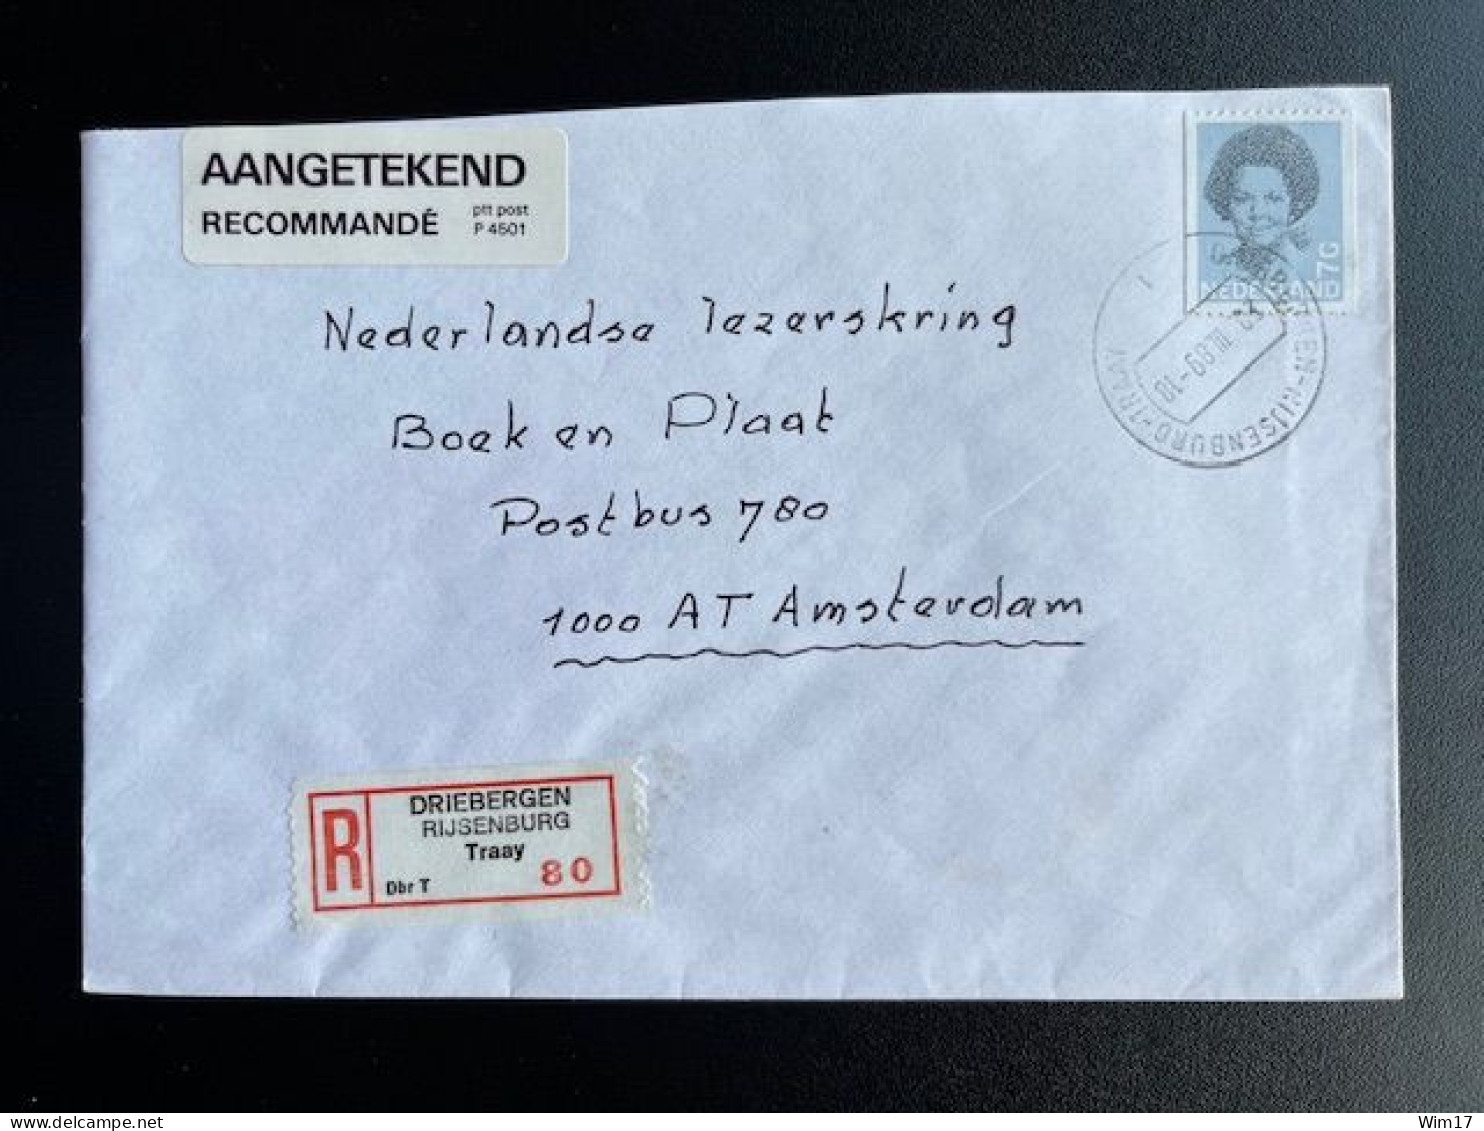 NETHERLANDS 1989 REGISTERED LETTER DRIEBERGEN RIJSENBURG TRAAY TO AMSTERDAM 28-03-1989 NEDERLAND AANGETEKEND - Lettres & Documents